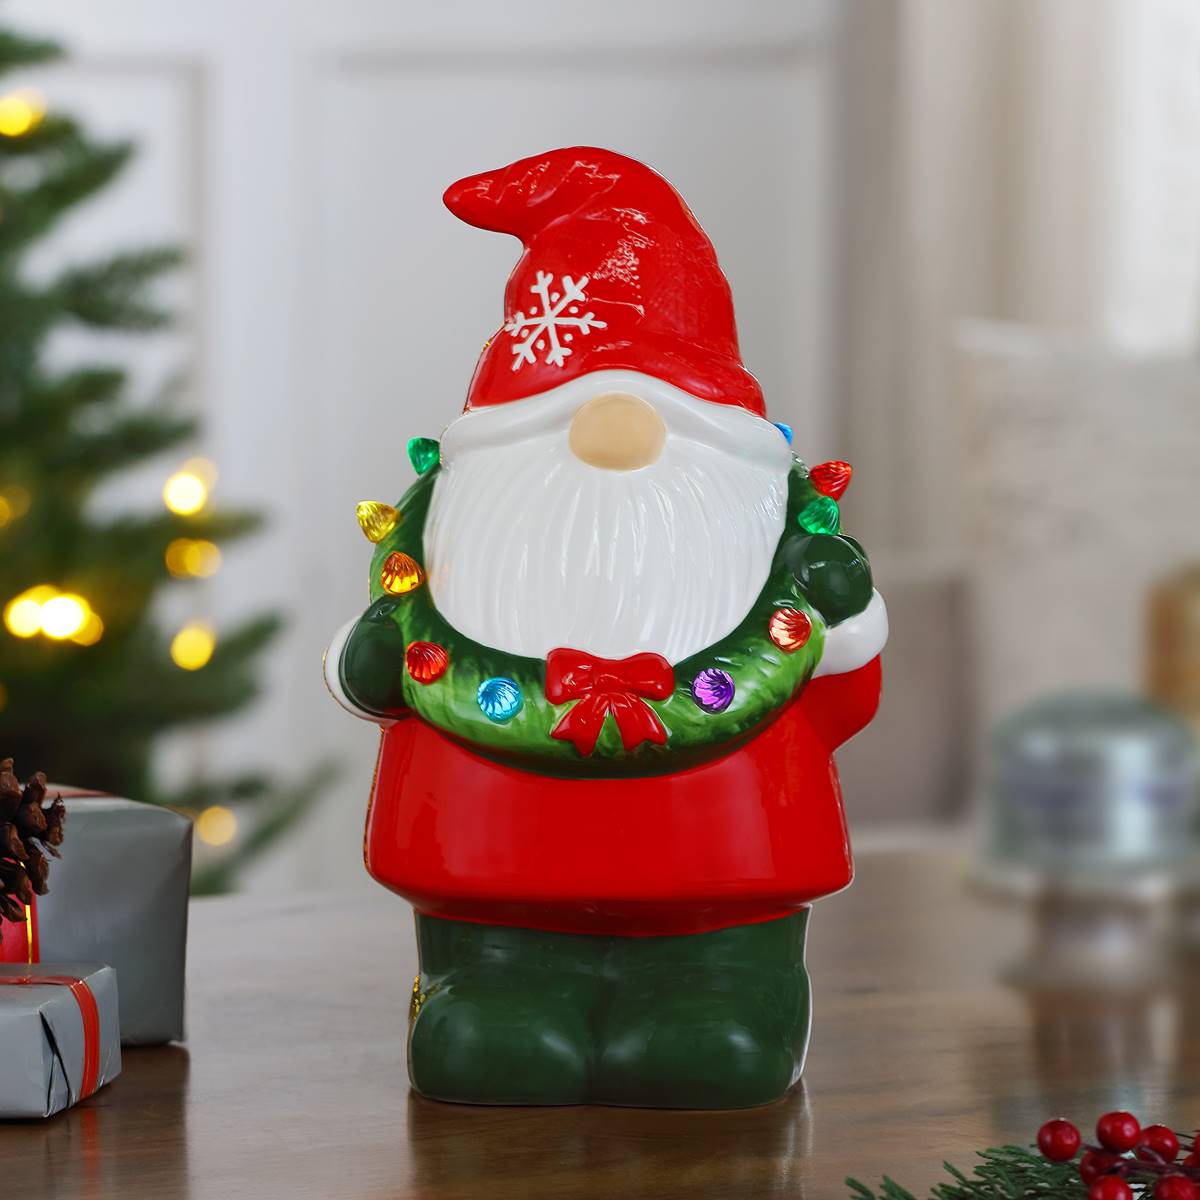 Mr. Christmas 12in. Nostalgic Ceramic Gnome With Wreath